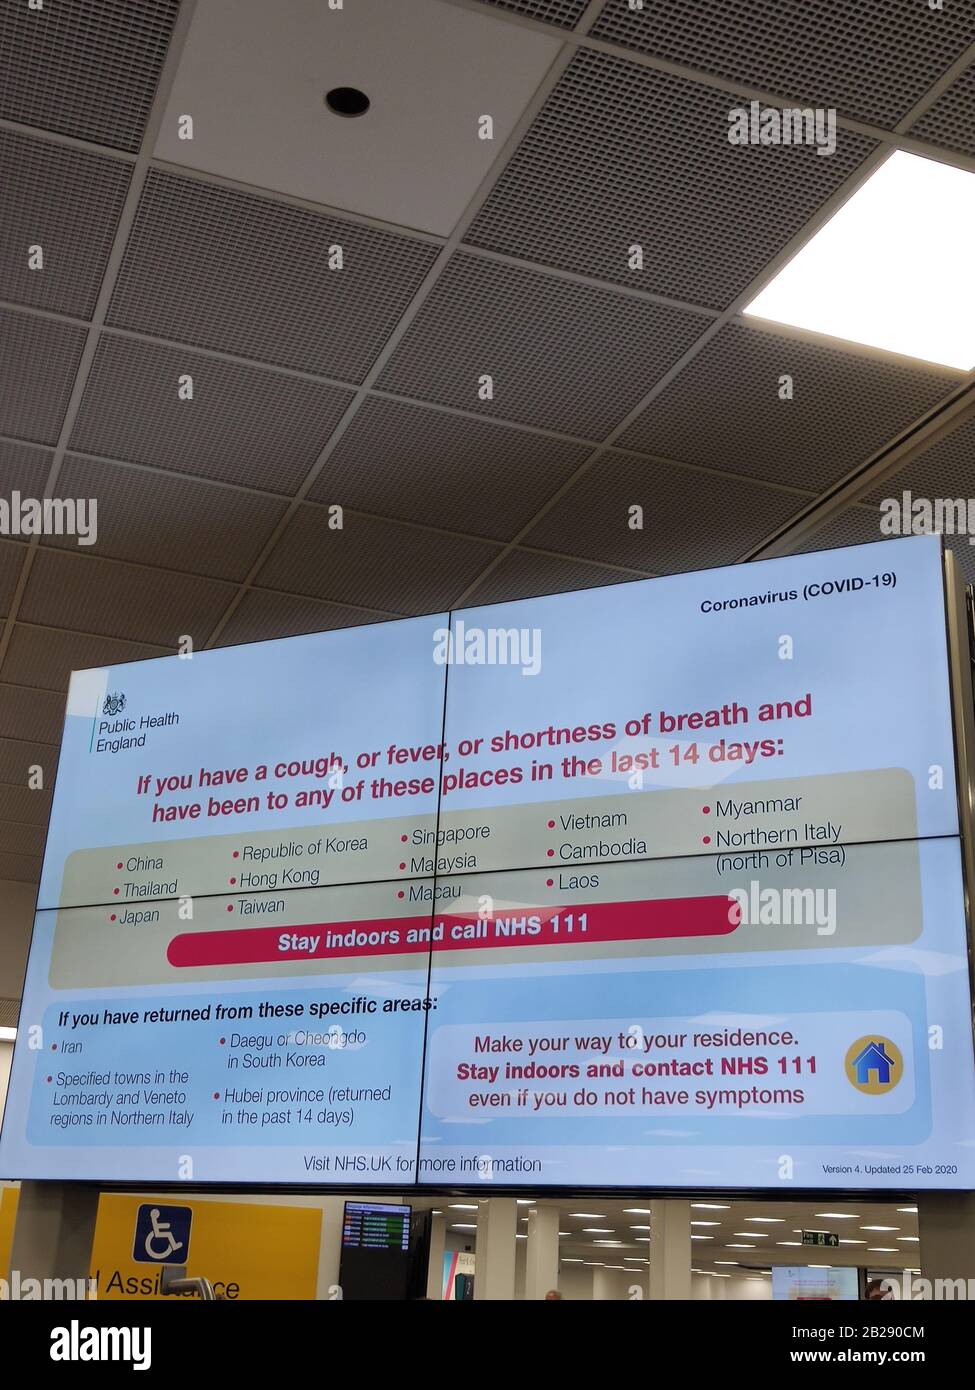 01/03/2020 - Luton Airport, United Kingdom - Coronavirus warning/alert screen in the arrival hall. Stock Photo